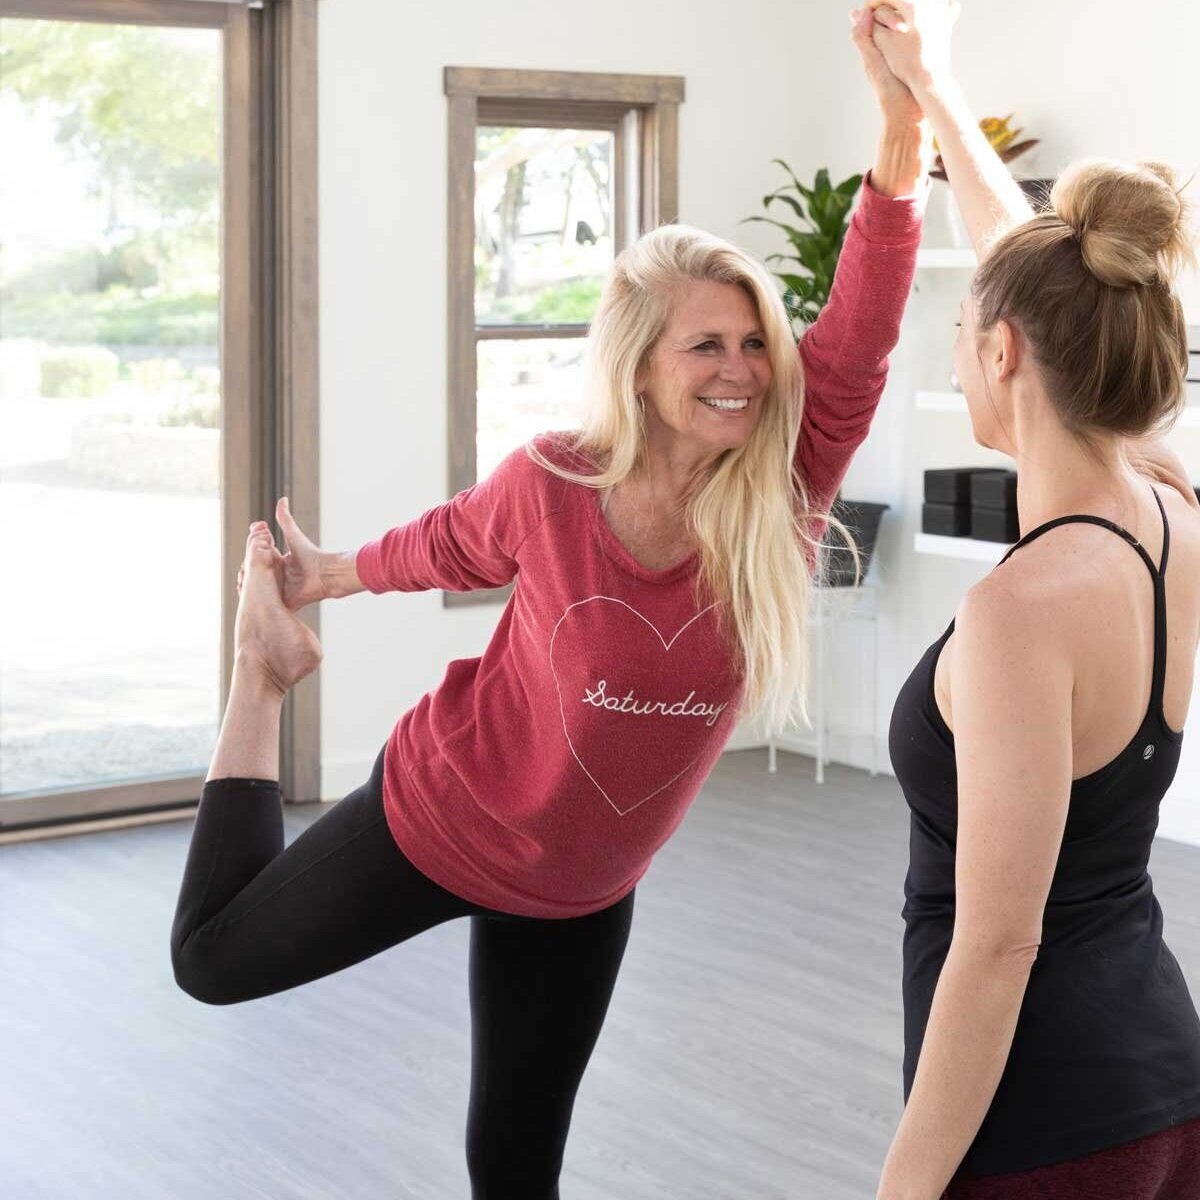 Hot Yoga Towel - No Slip — Olde Oak Meadow Yoga - Santa Ynez Indoor &  Outdoor Classes